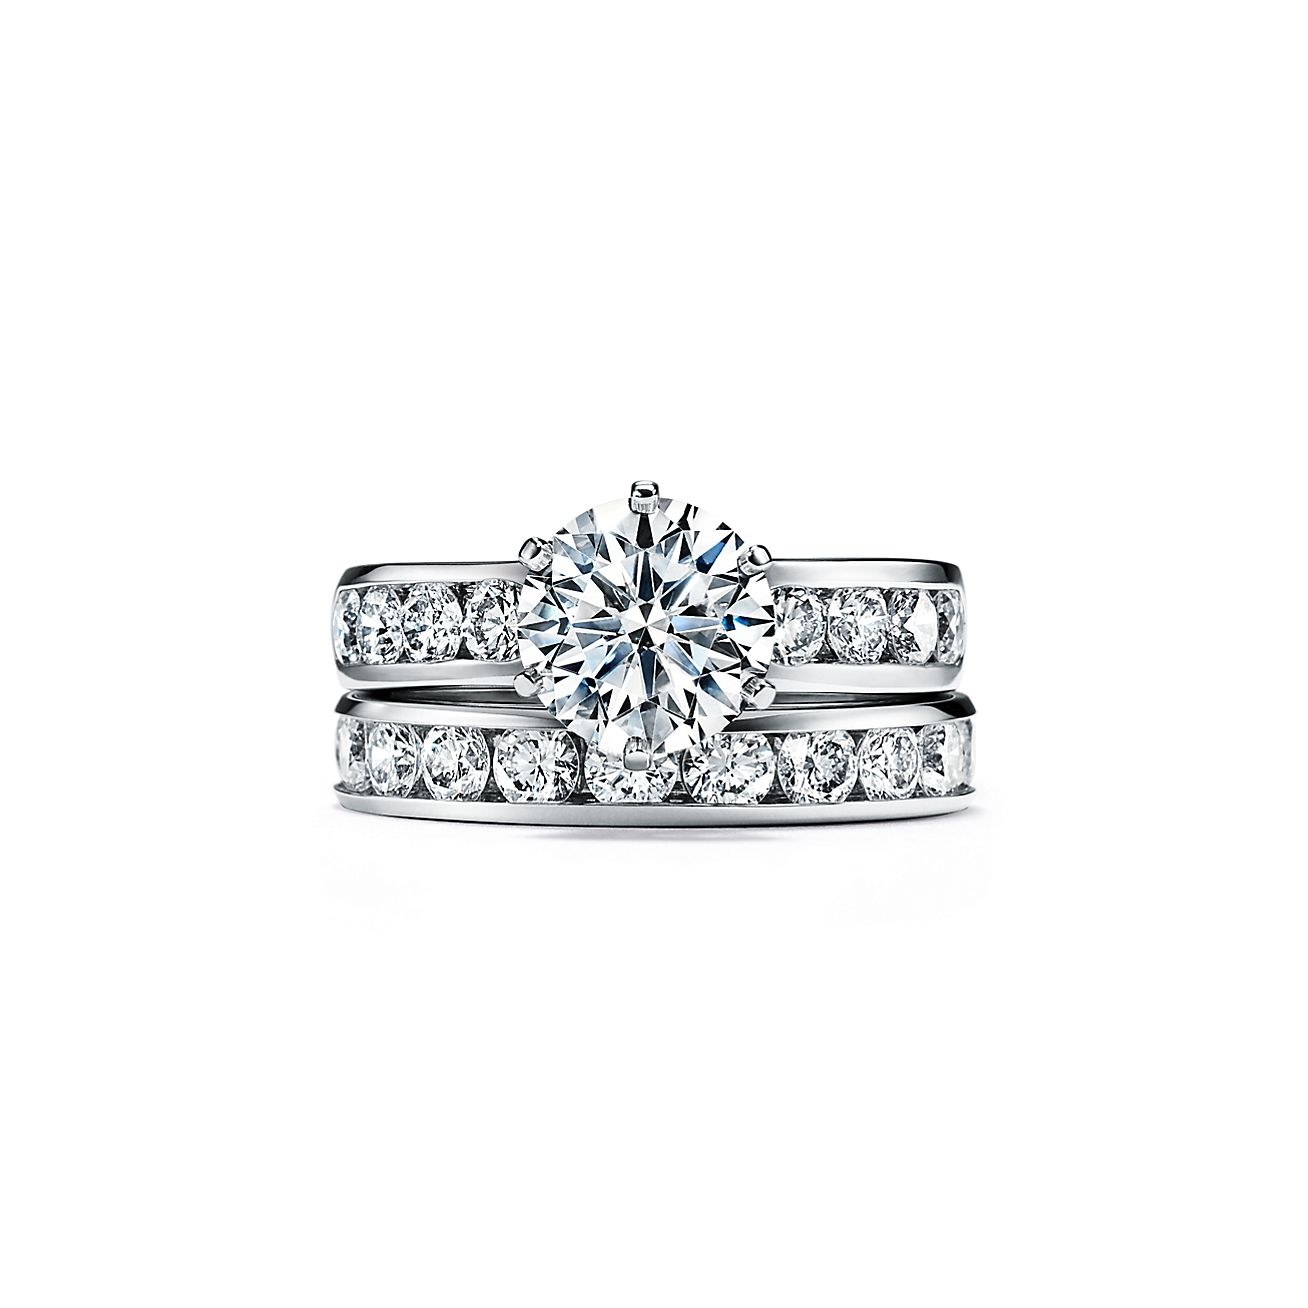 Tiffany® Setting 鉑金槽式鑲嵌鑽石環訂婚戒指